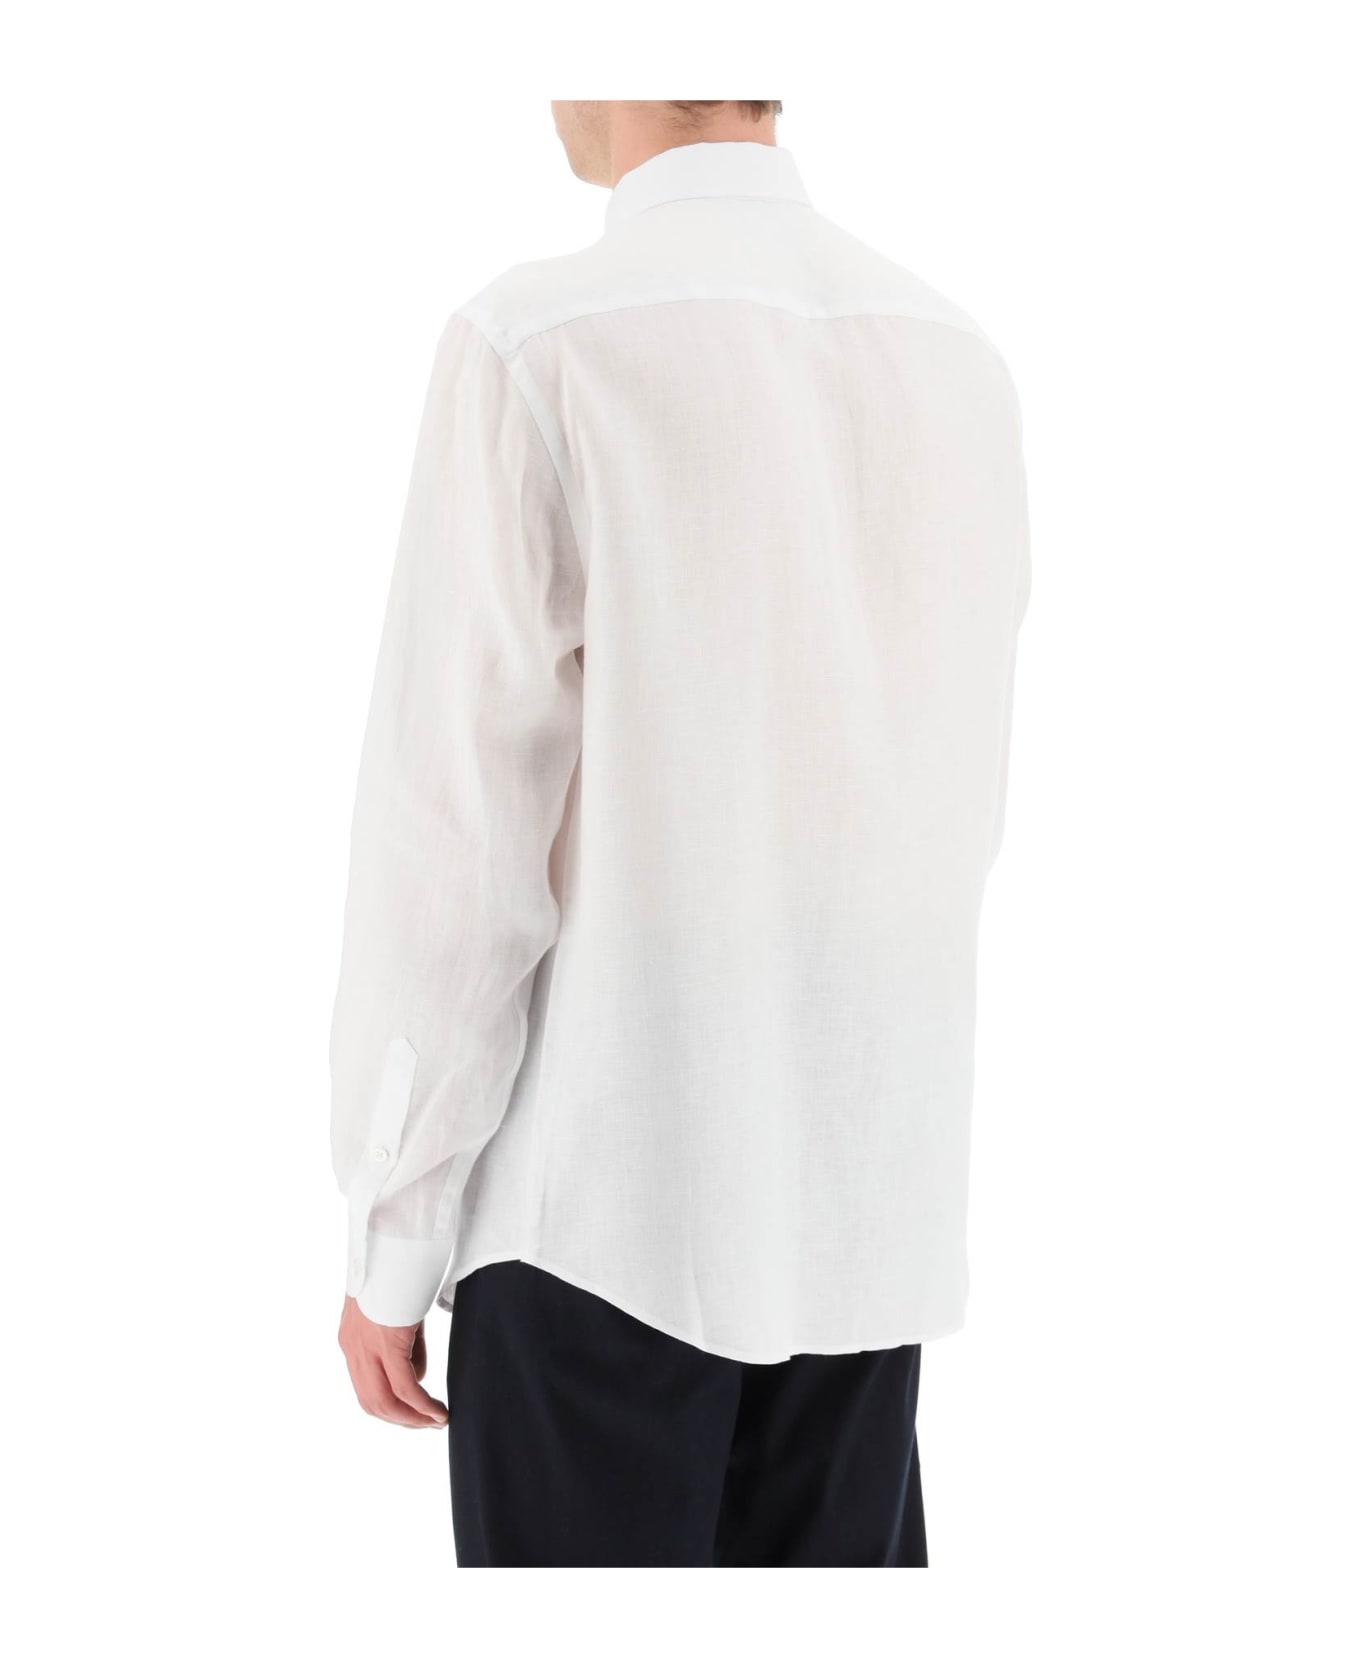 Emporio Armani Classic Shirt - BIANCO (White)